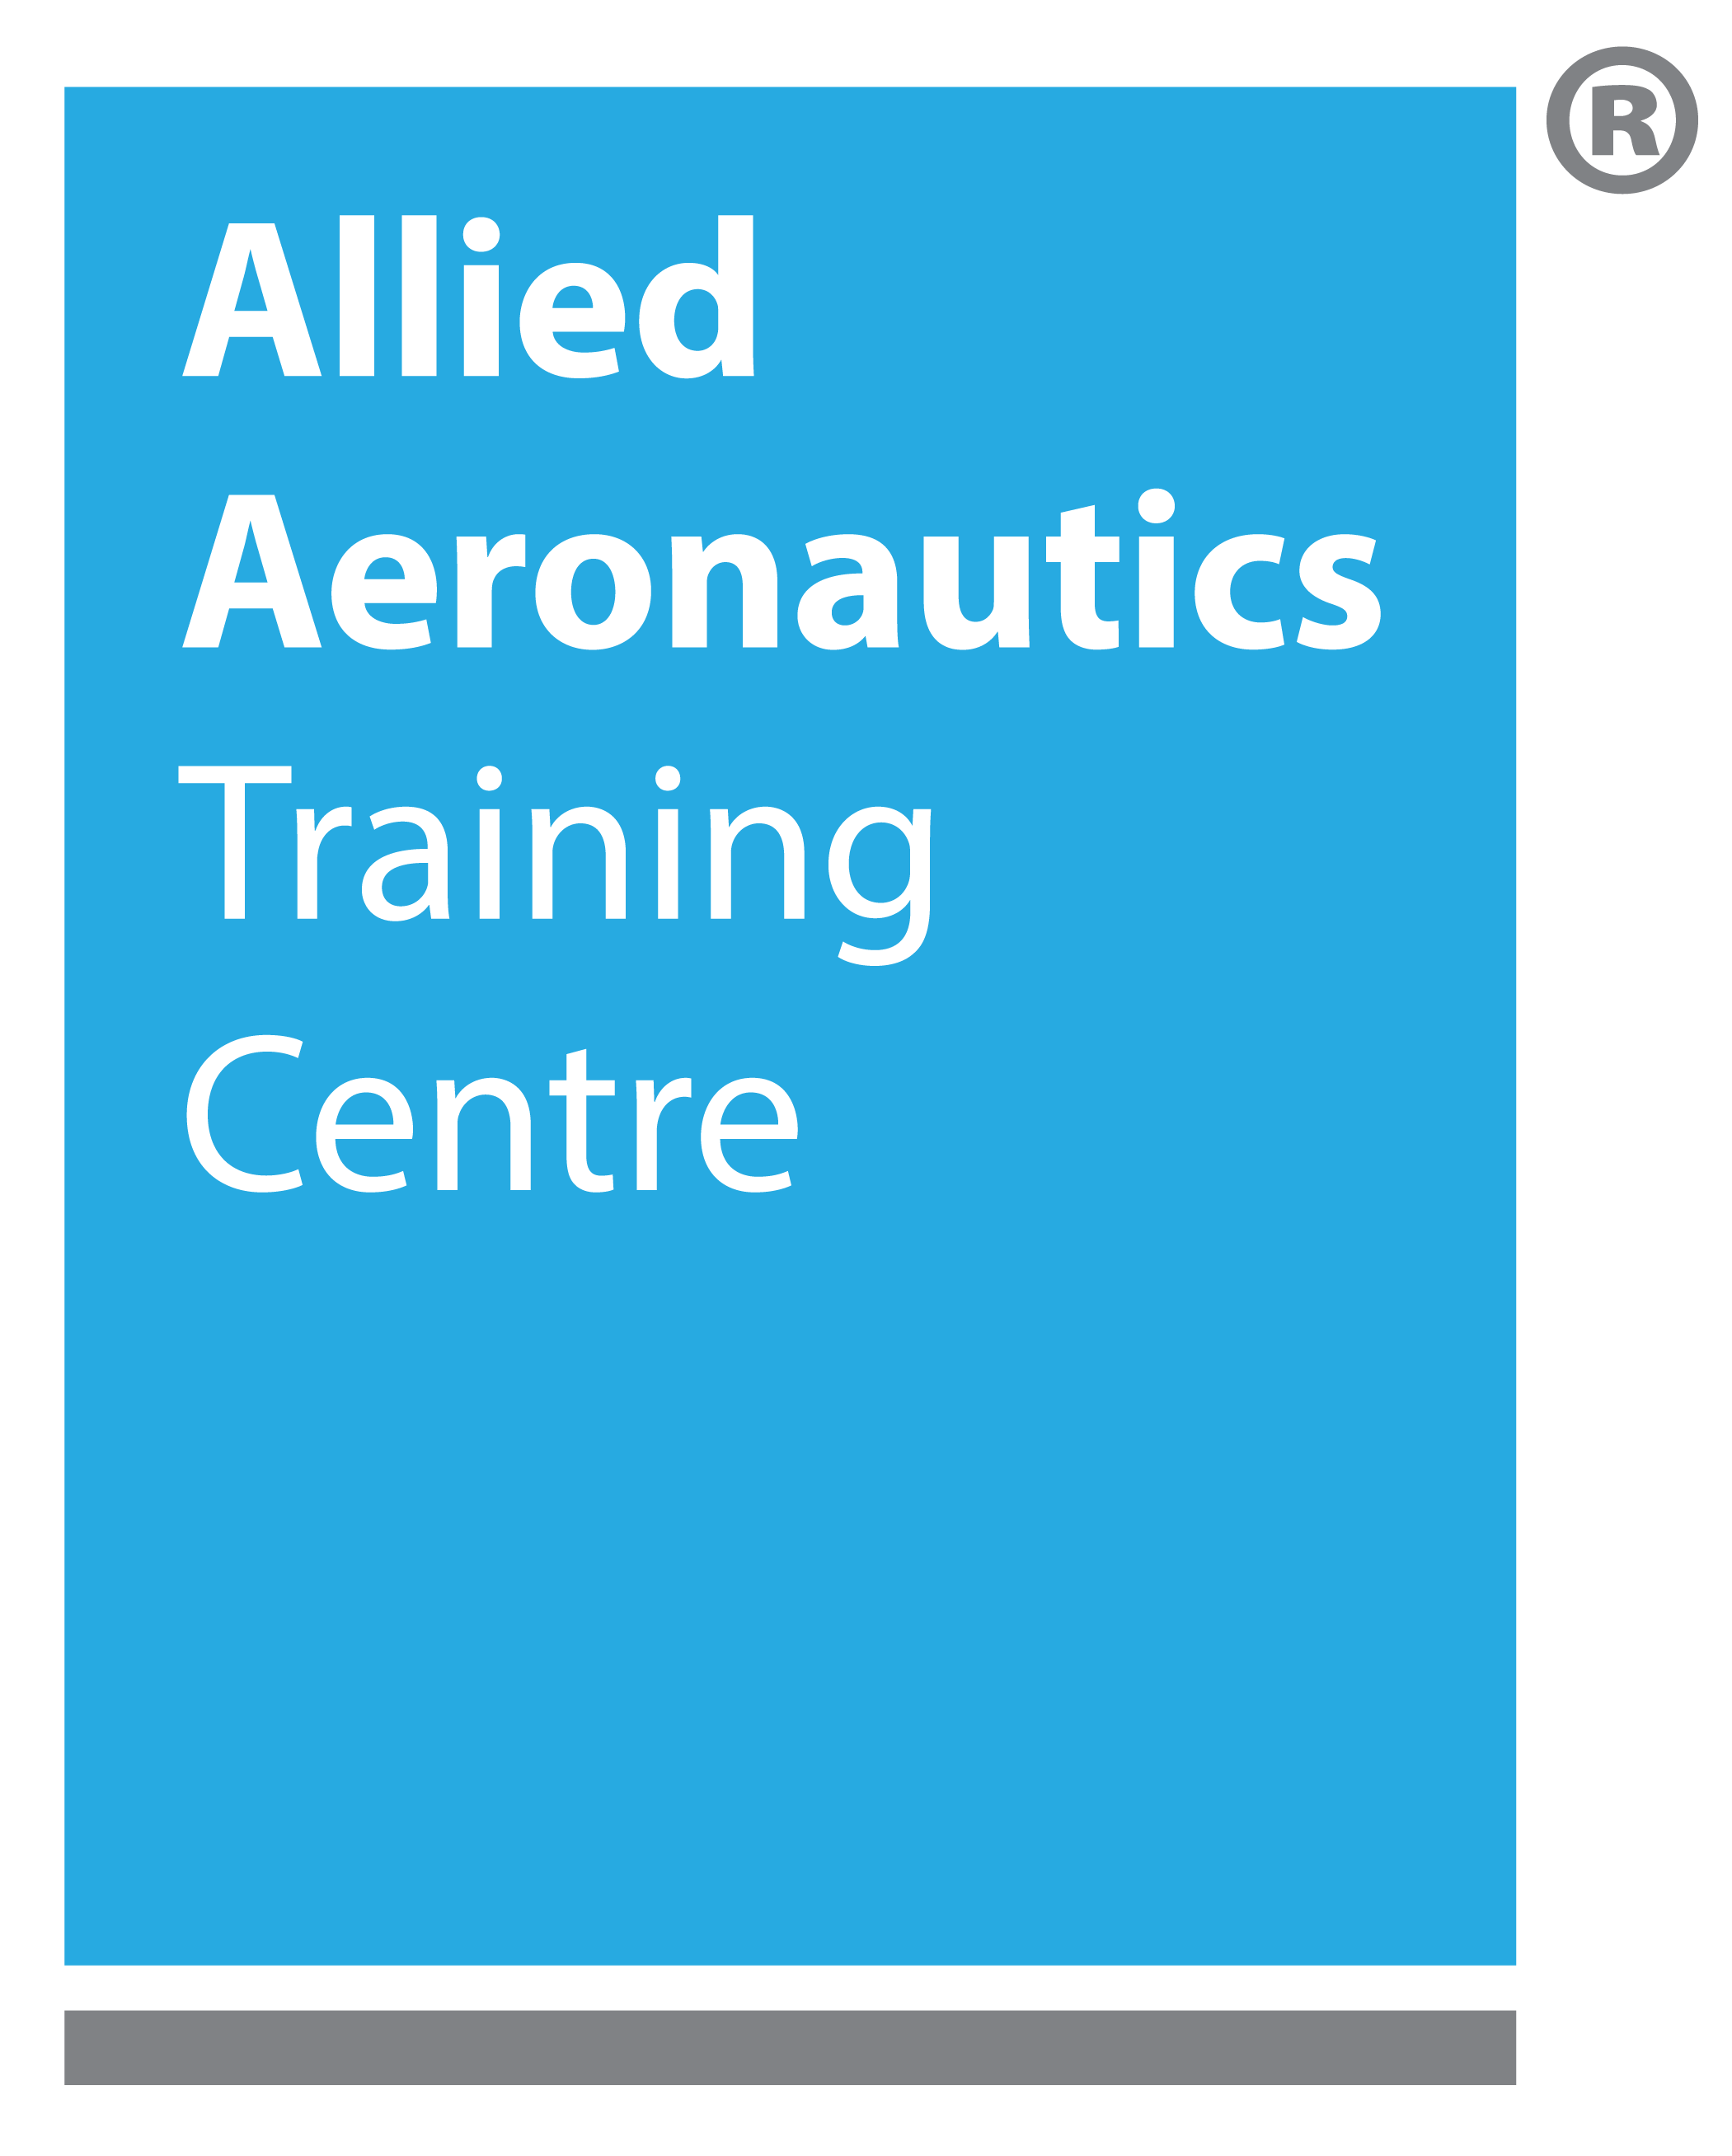 Allied Aeronautics Training Centre